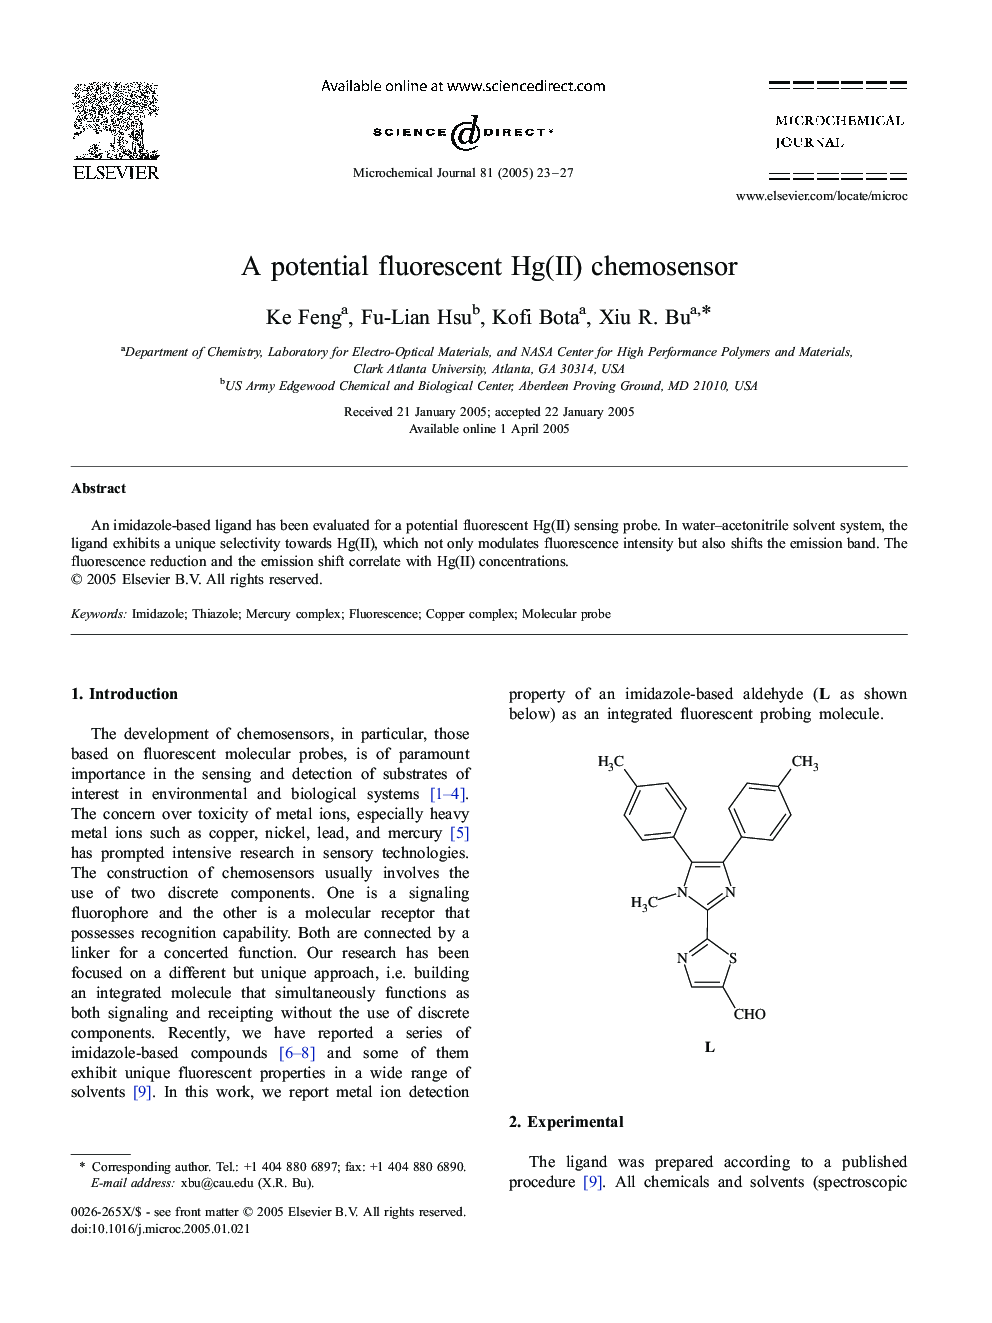 A potential fluorescent Hg(II) chemosensor